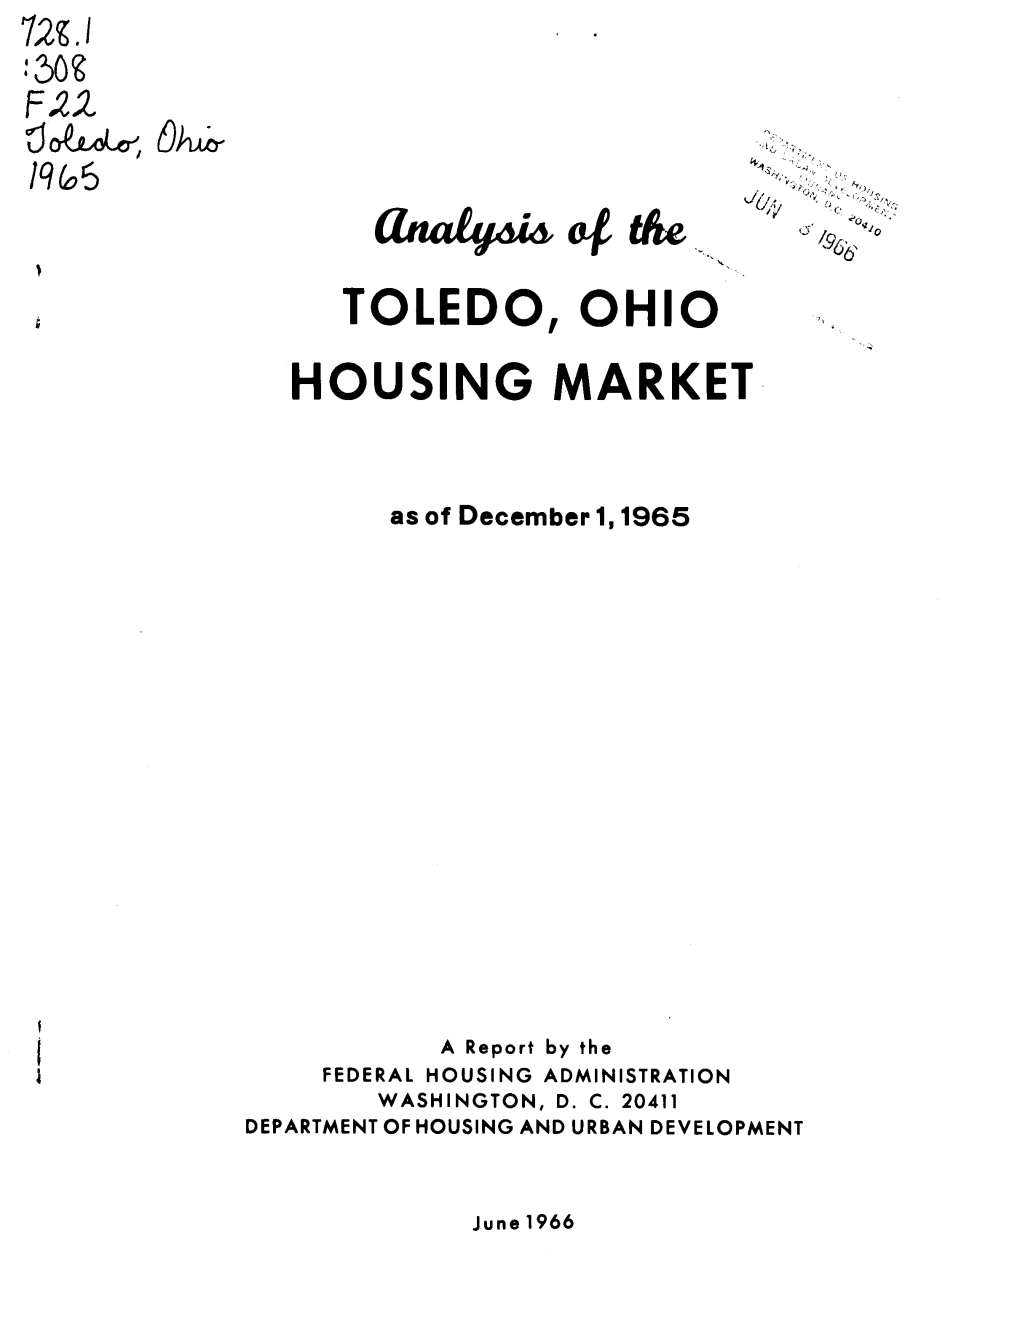 Analysis of the Toledo, Ohio Housing Market